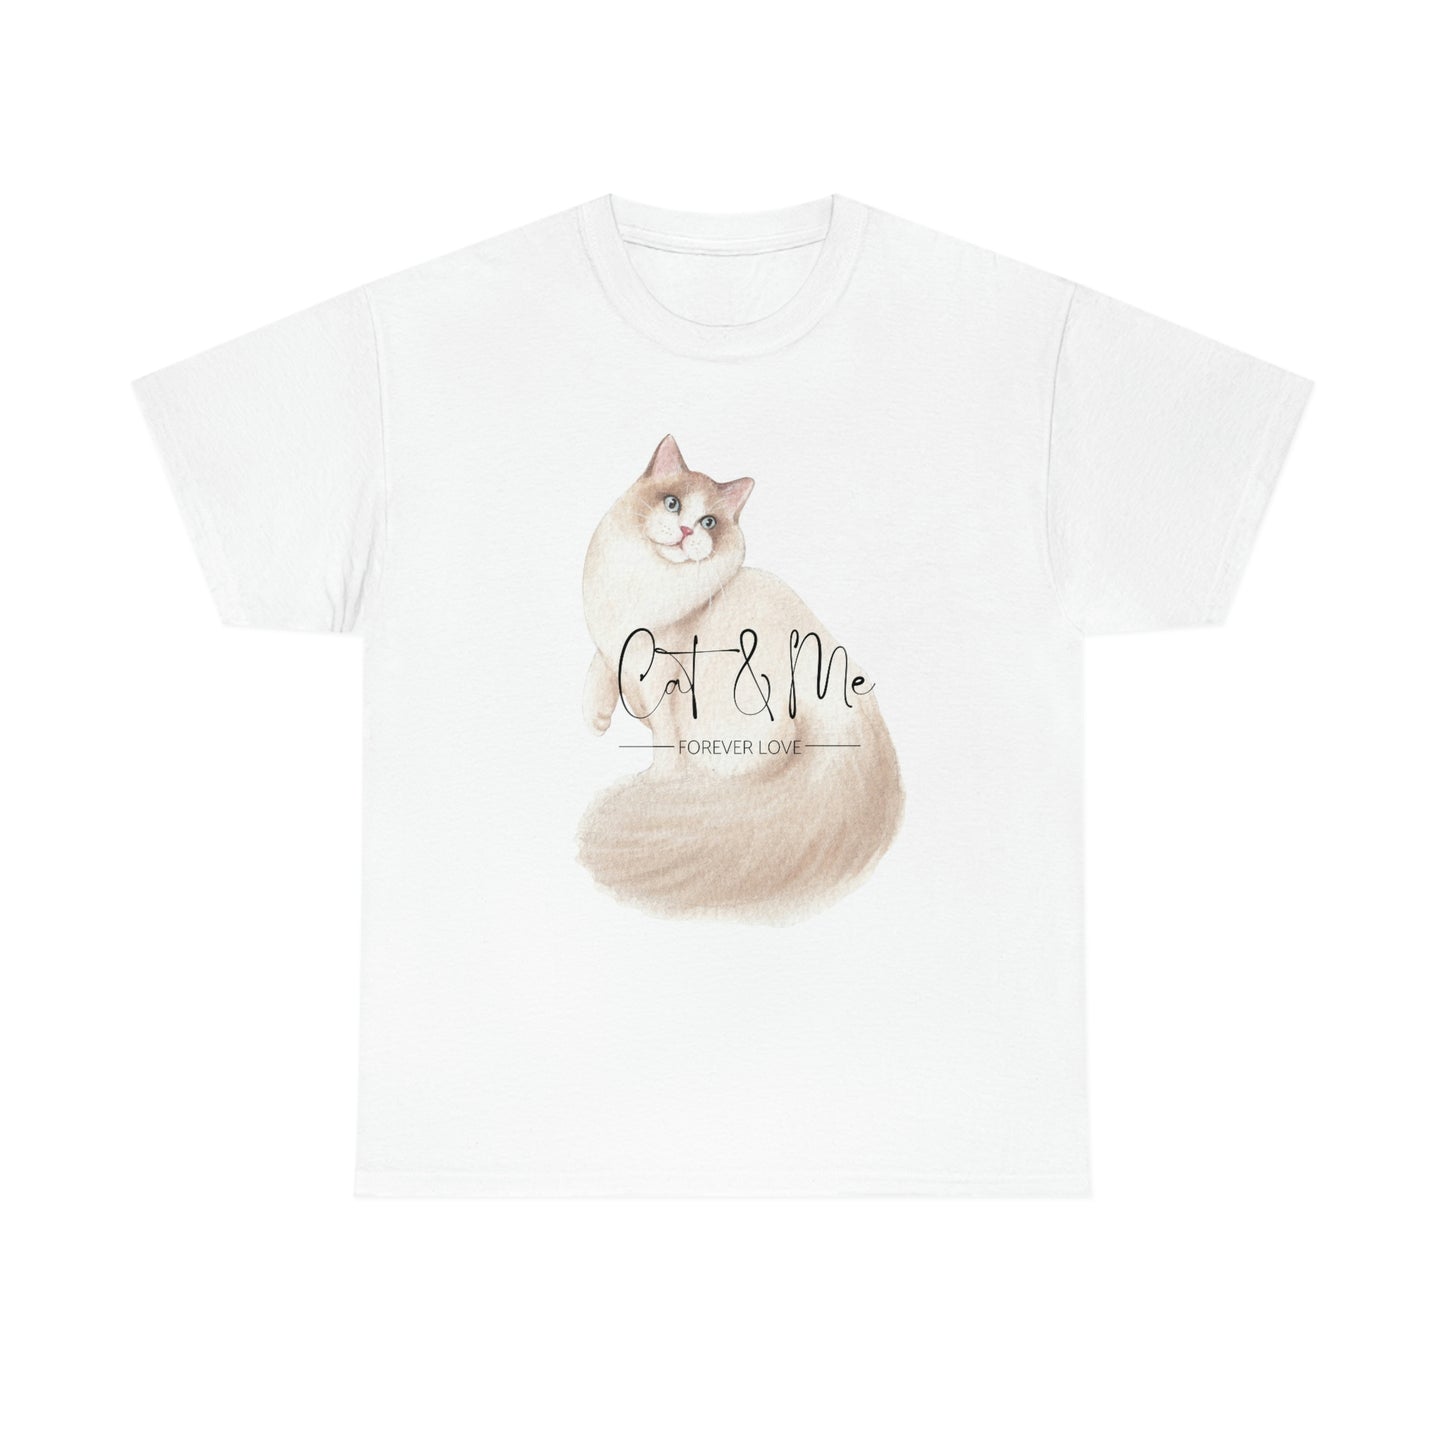 (Cat Lover) Cat & Me Forever Love  design white Cotton Tee